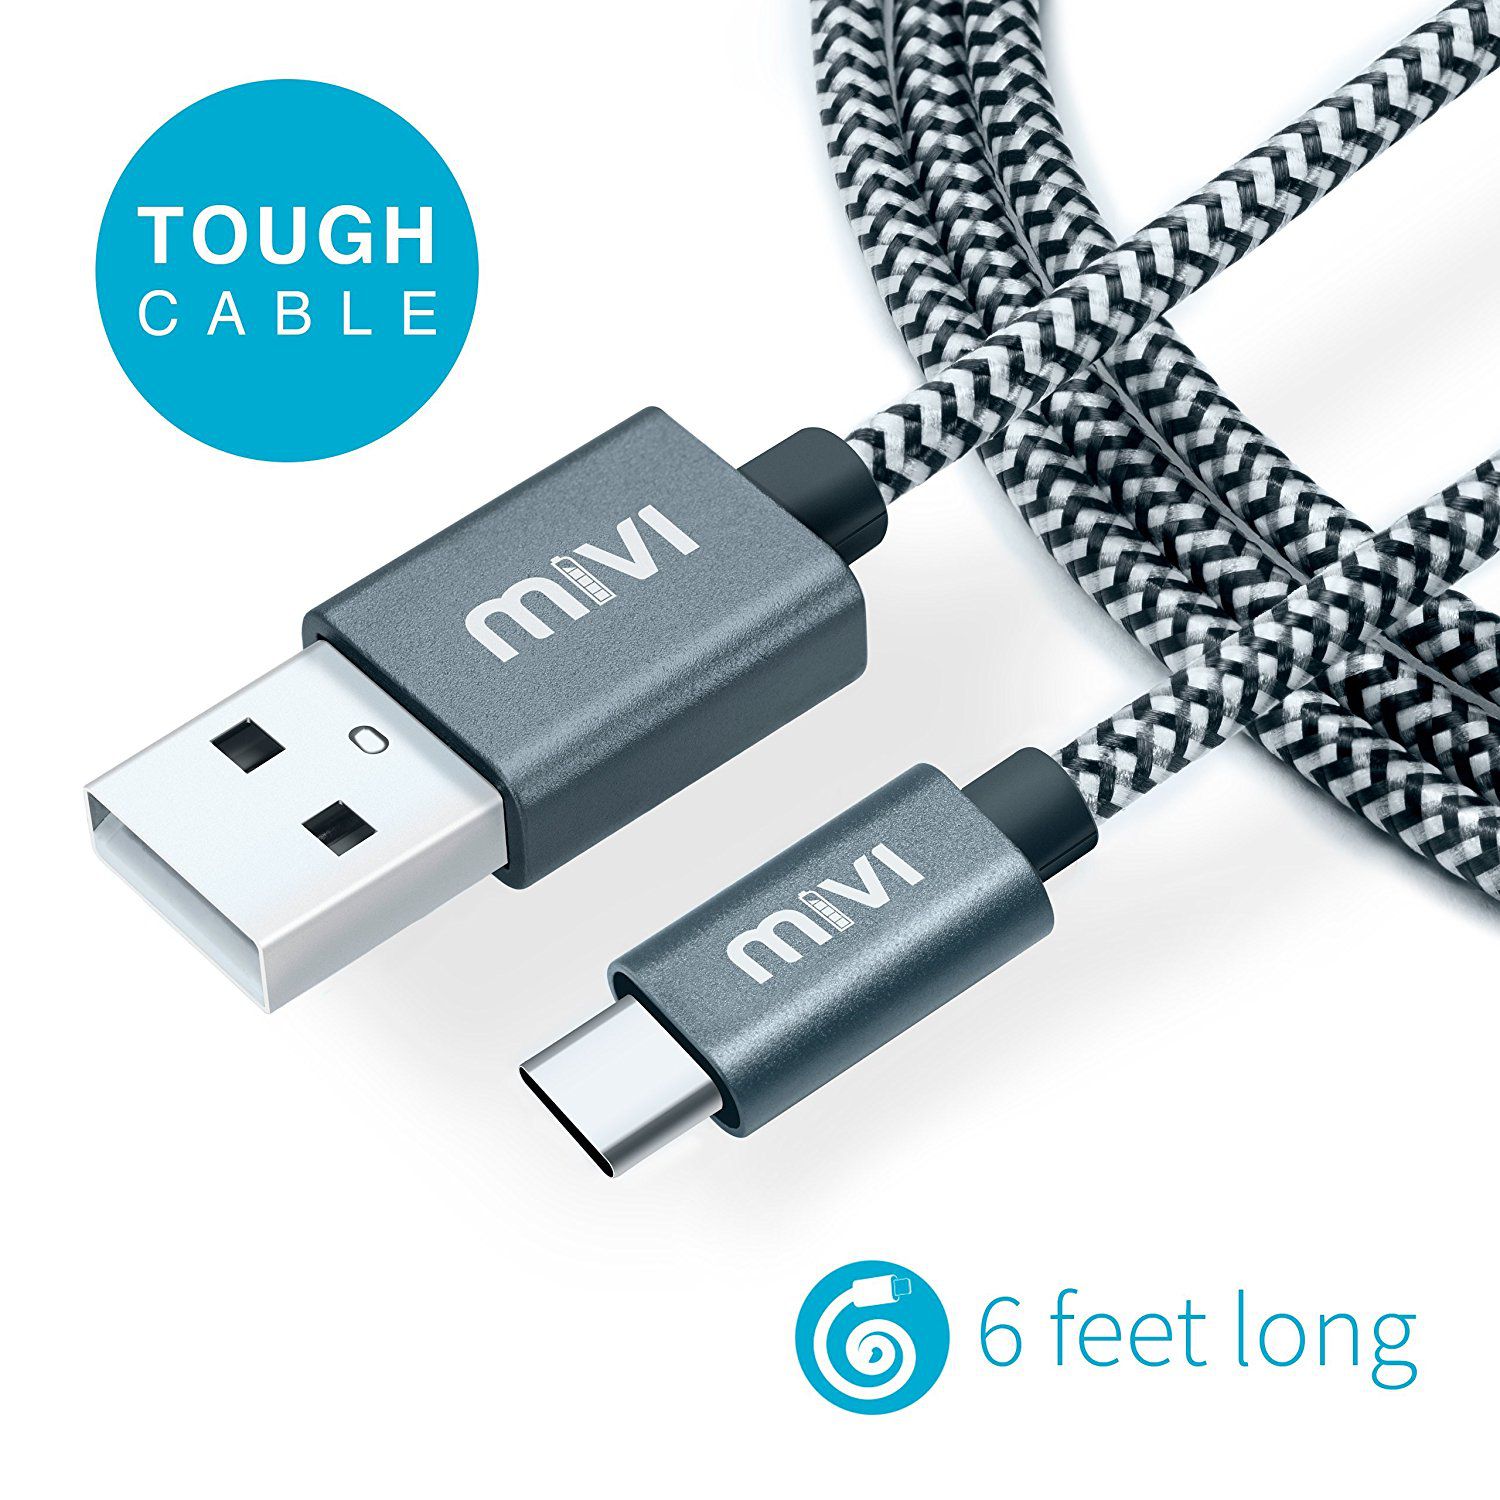     			Type C USB C to USB A 2.0 6 ft long Nylon Braided Original Mivi Tough Cable